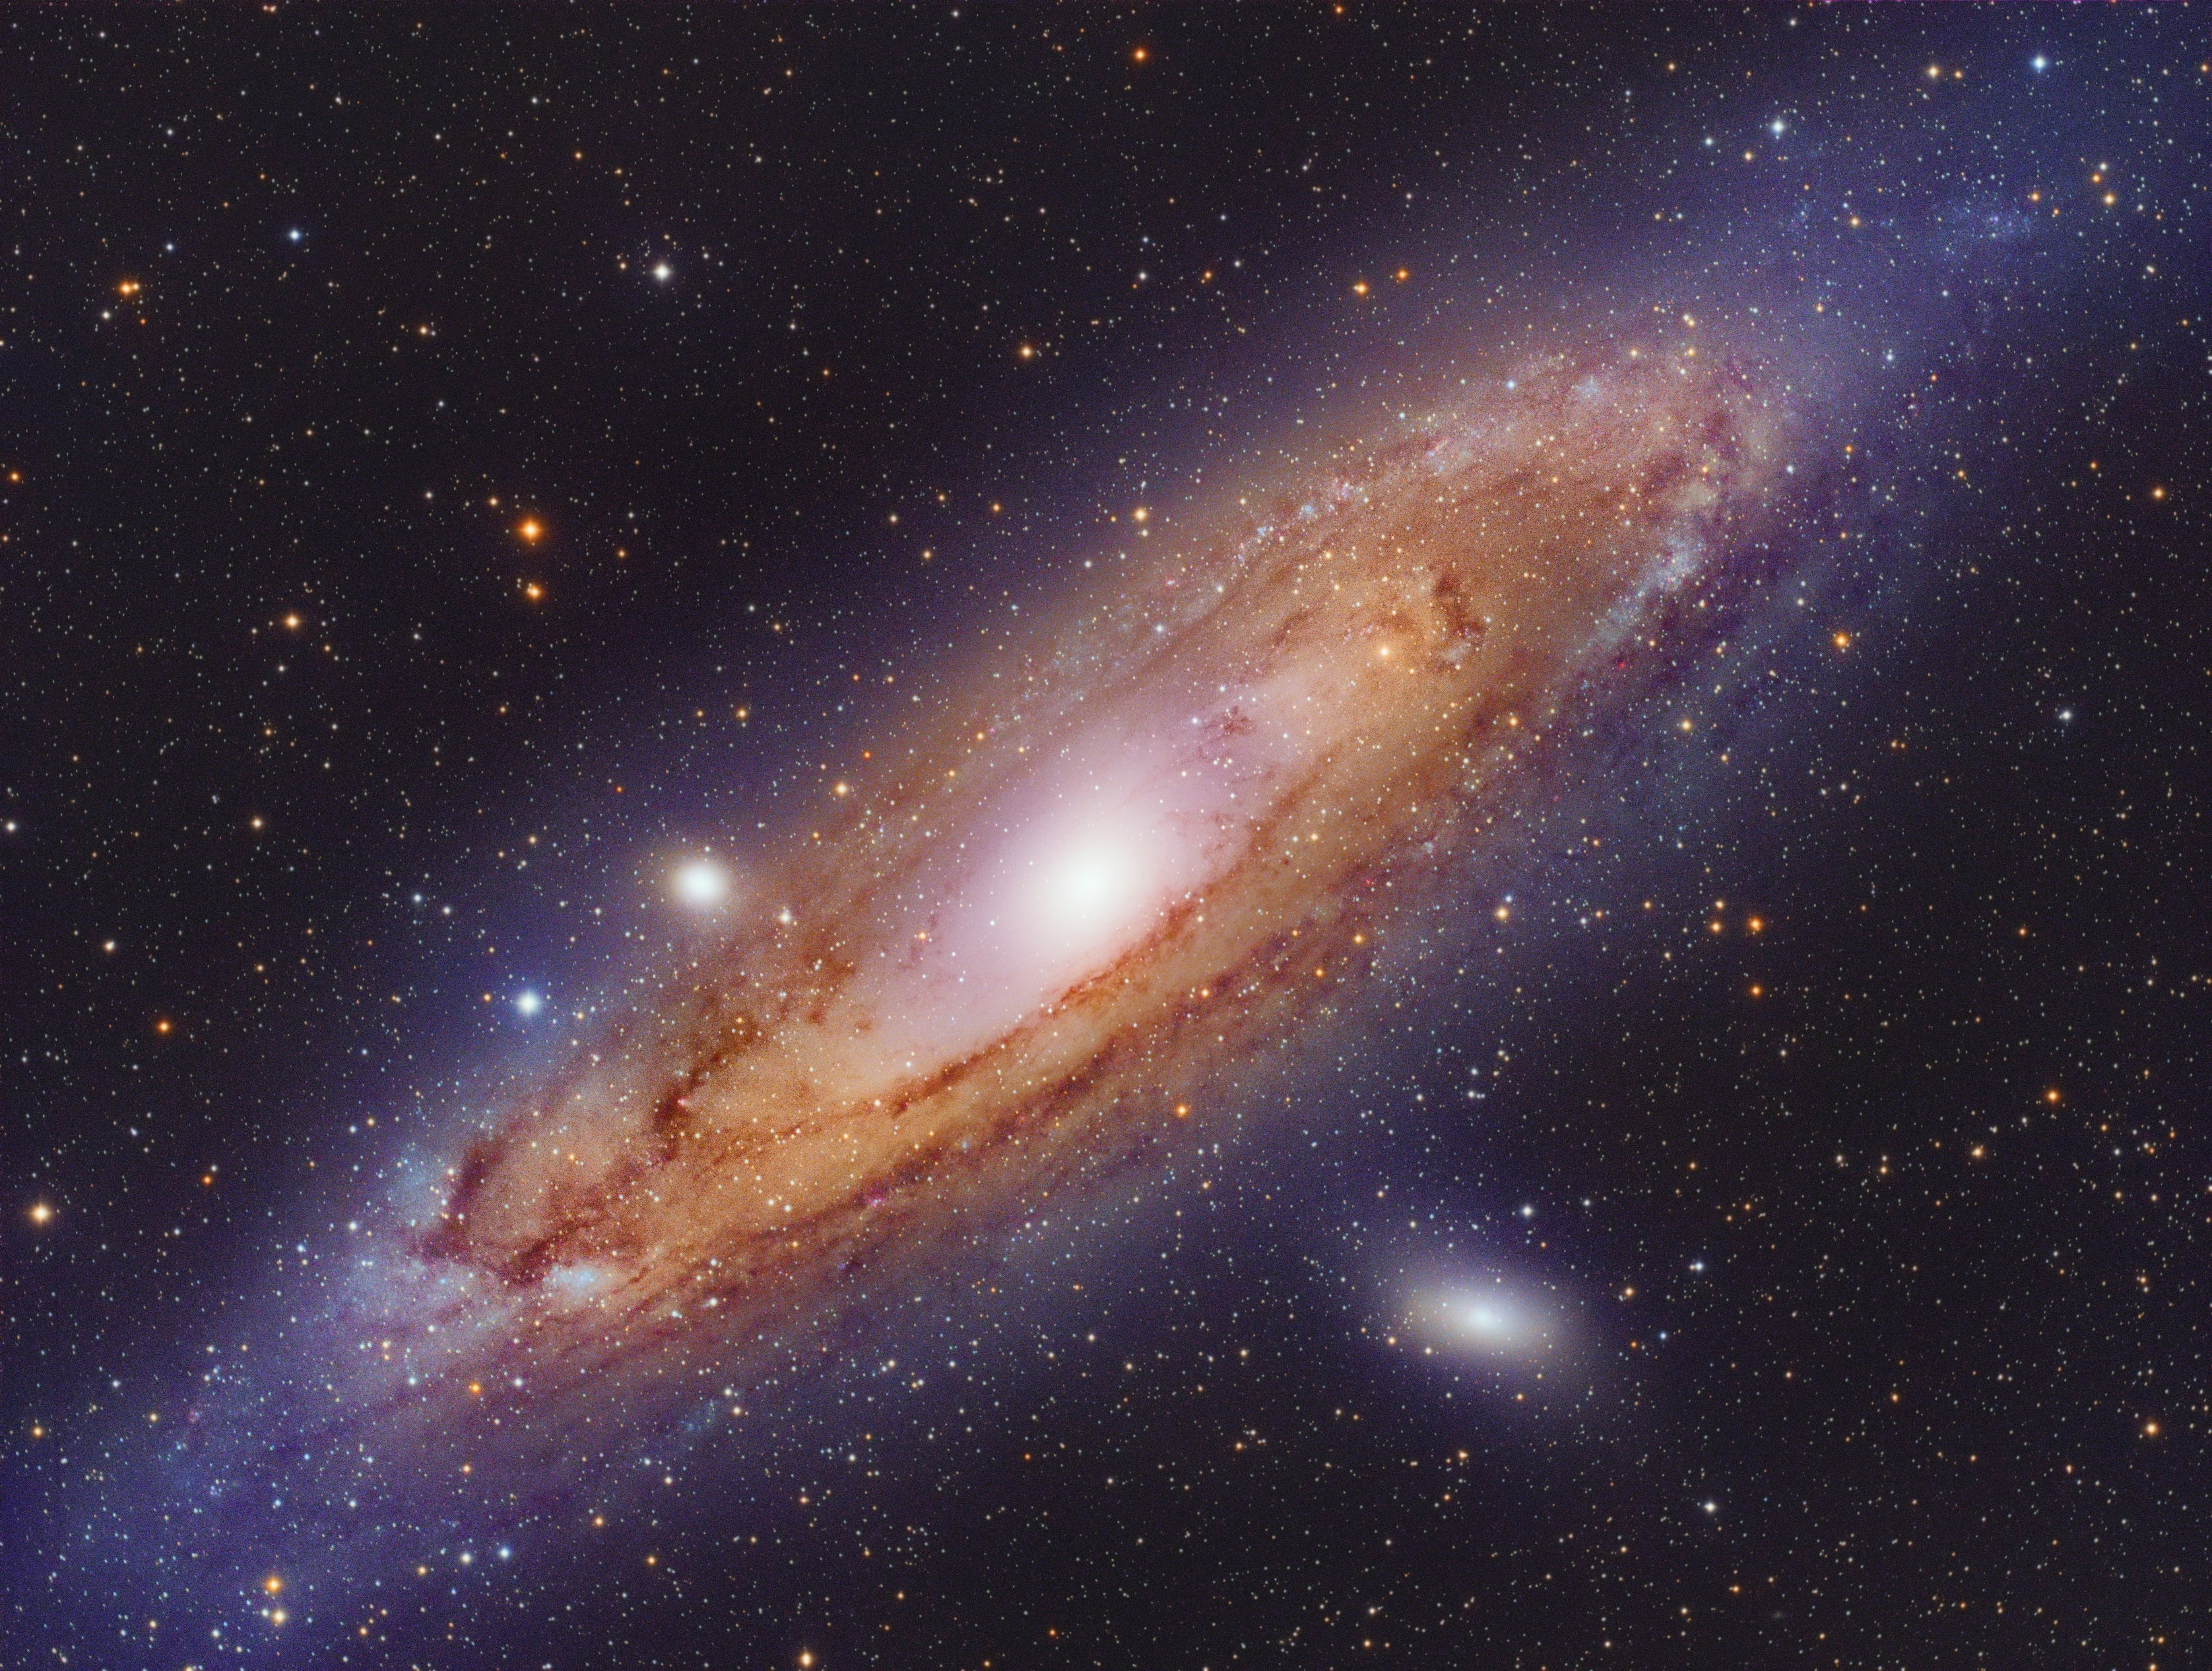 The great Andromeda galaxy